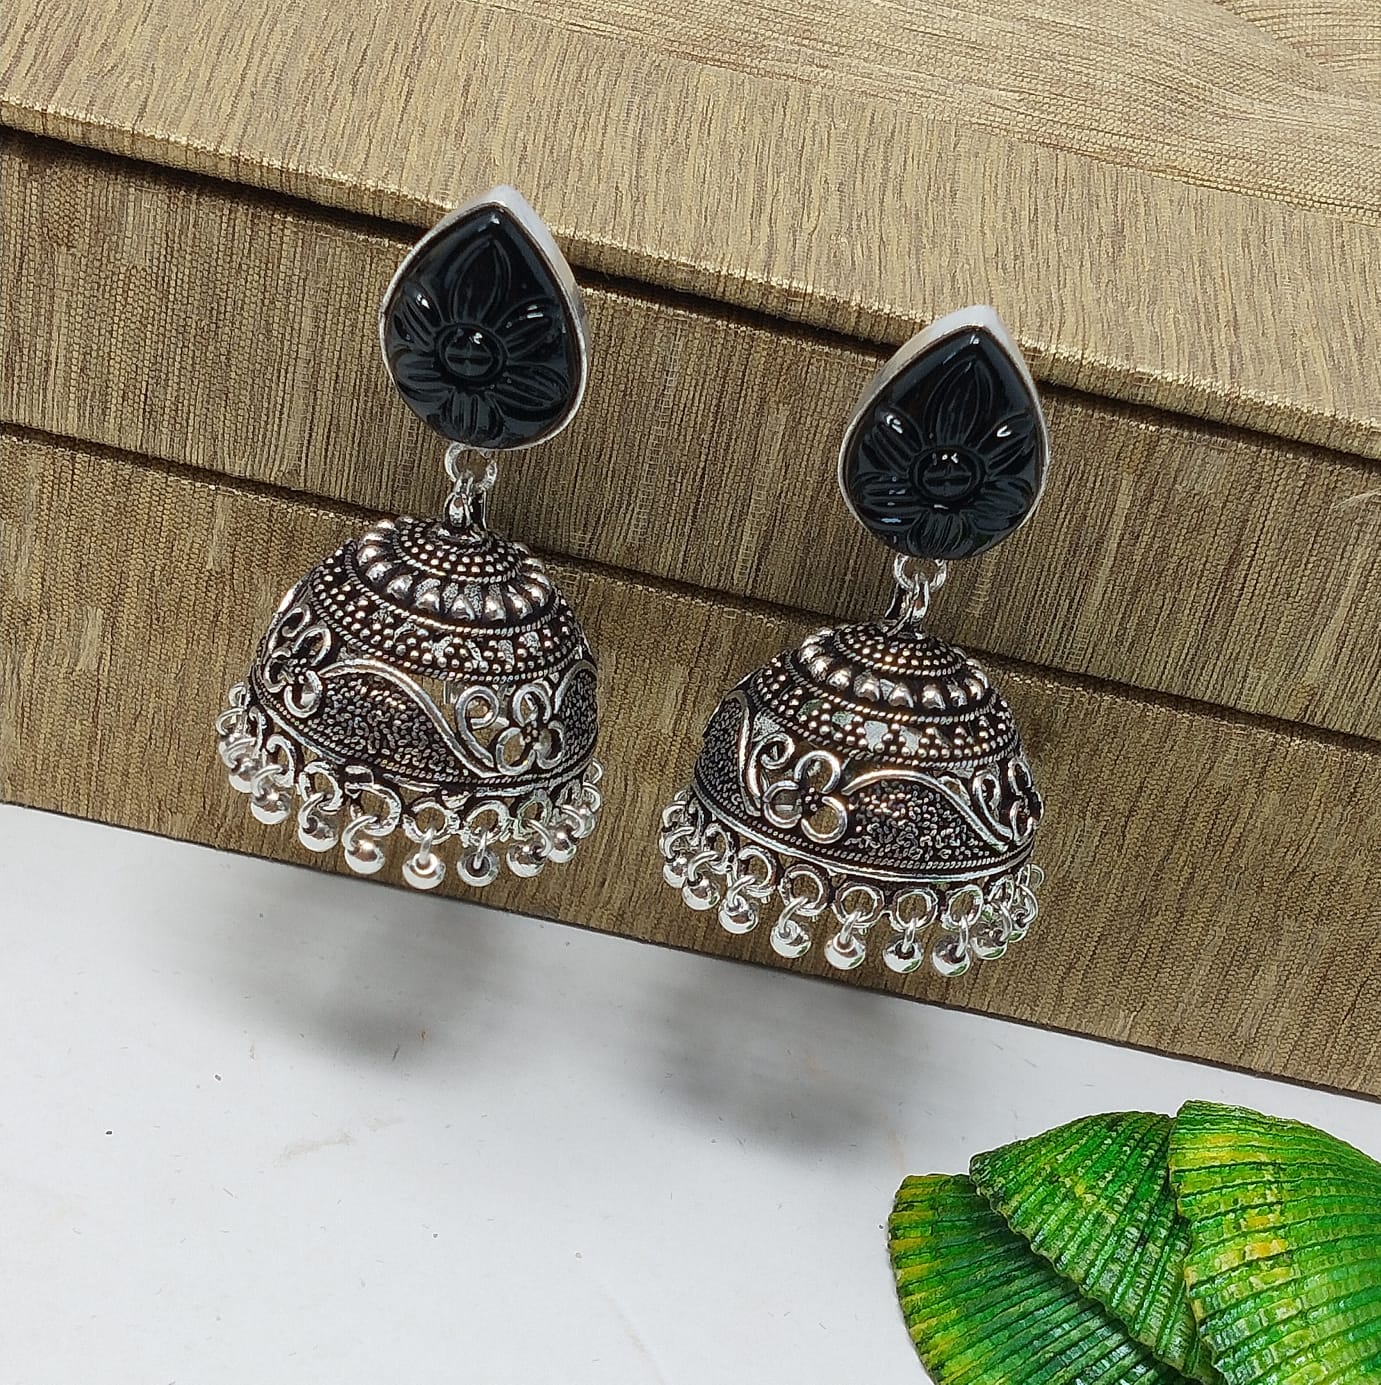 Enchanting Ethnic Elegance: Gem Stone Jhumka Earrings for a Striking Look